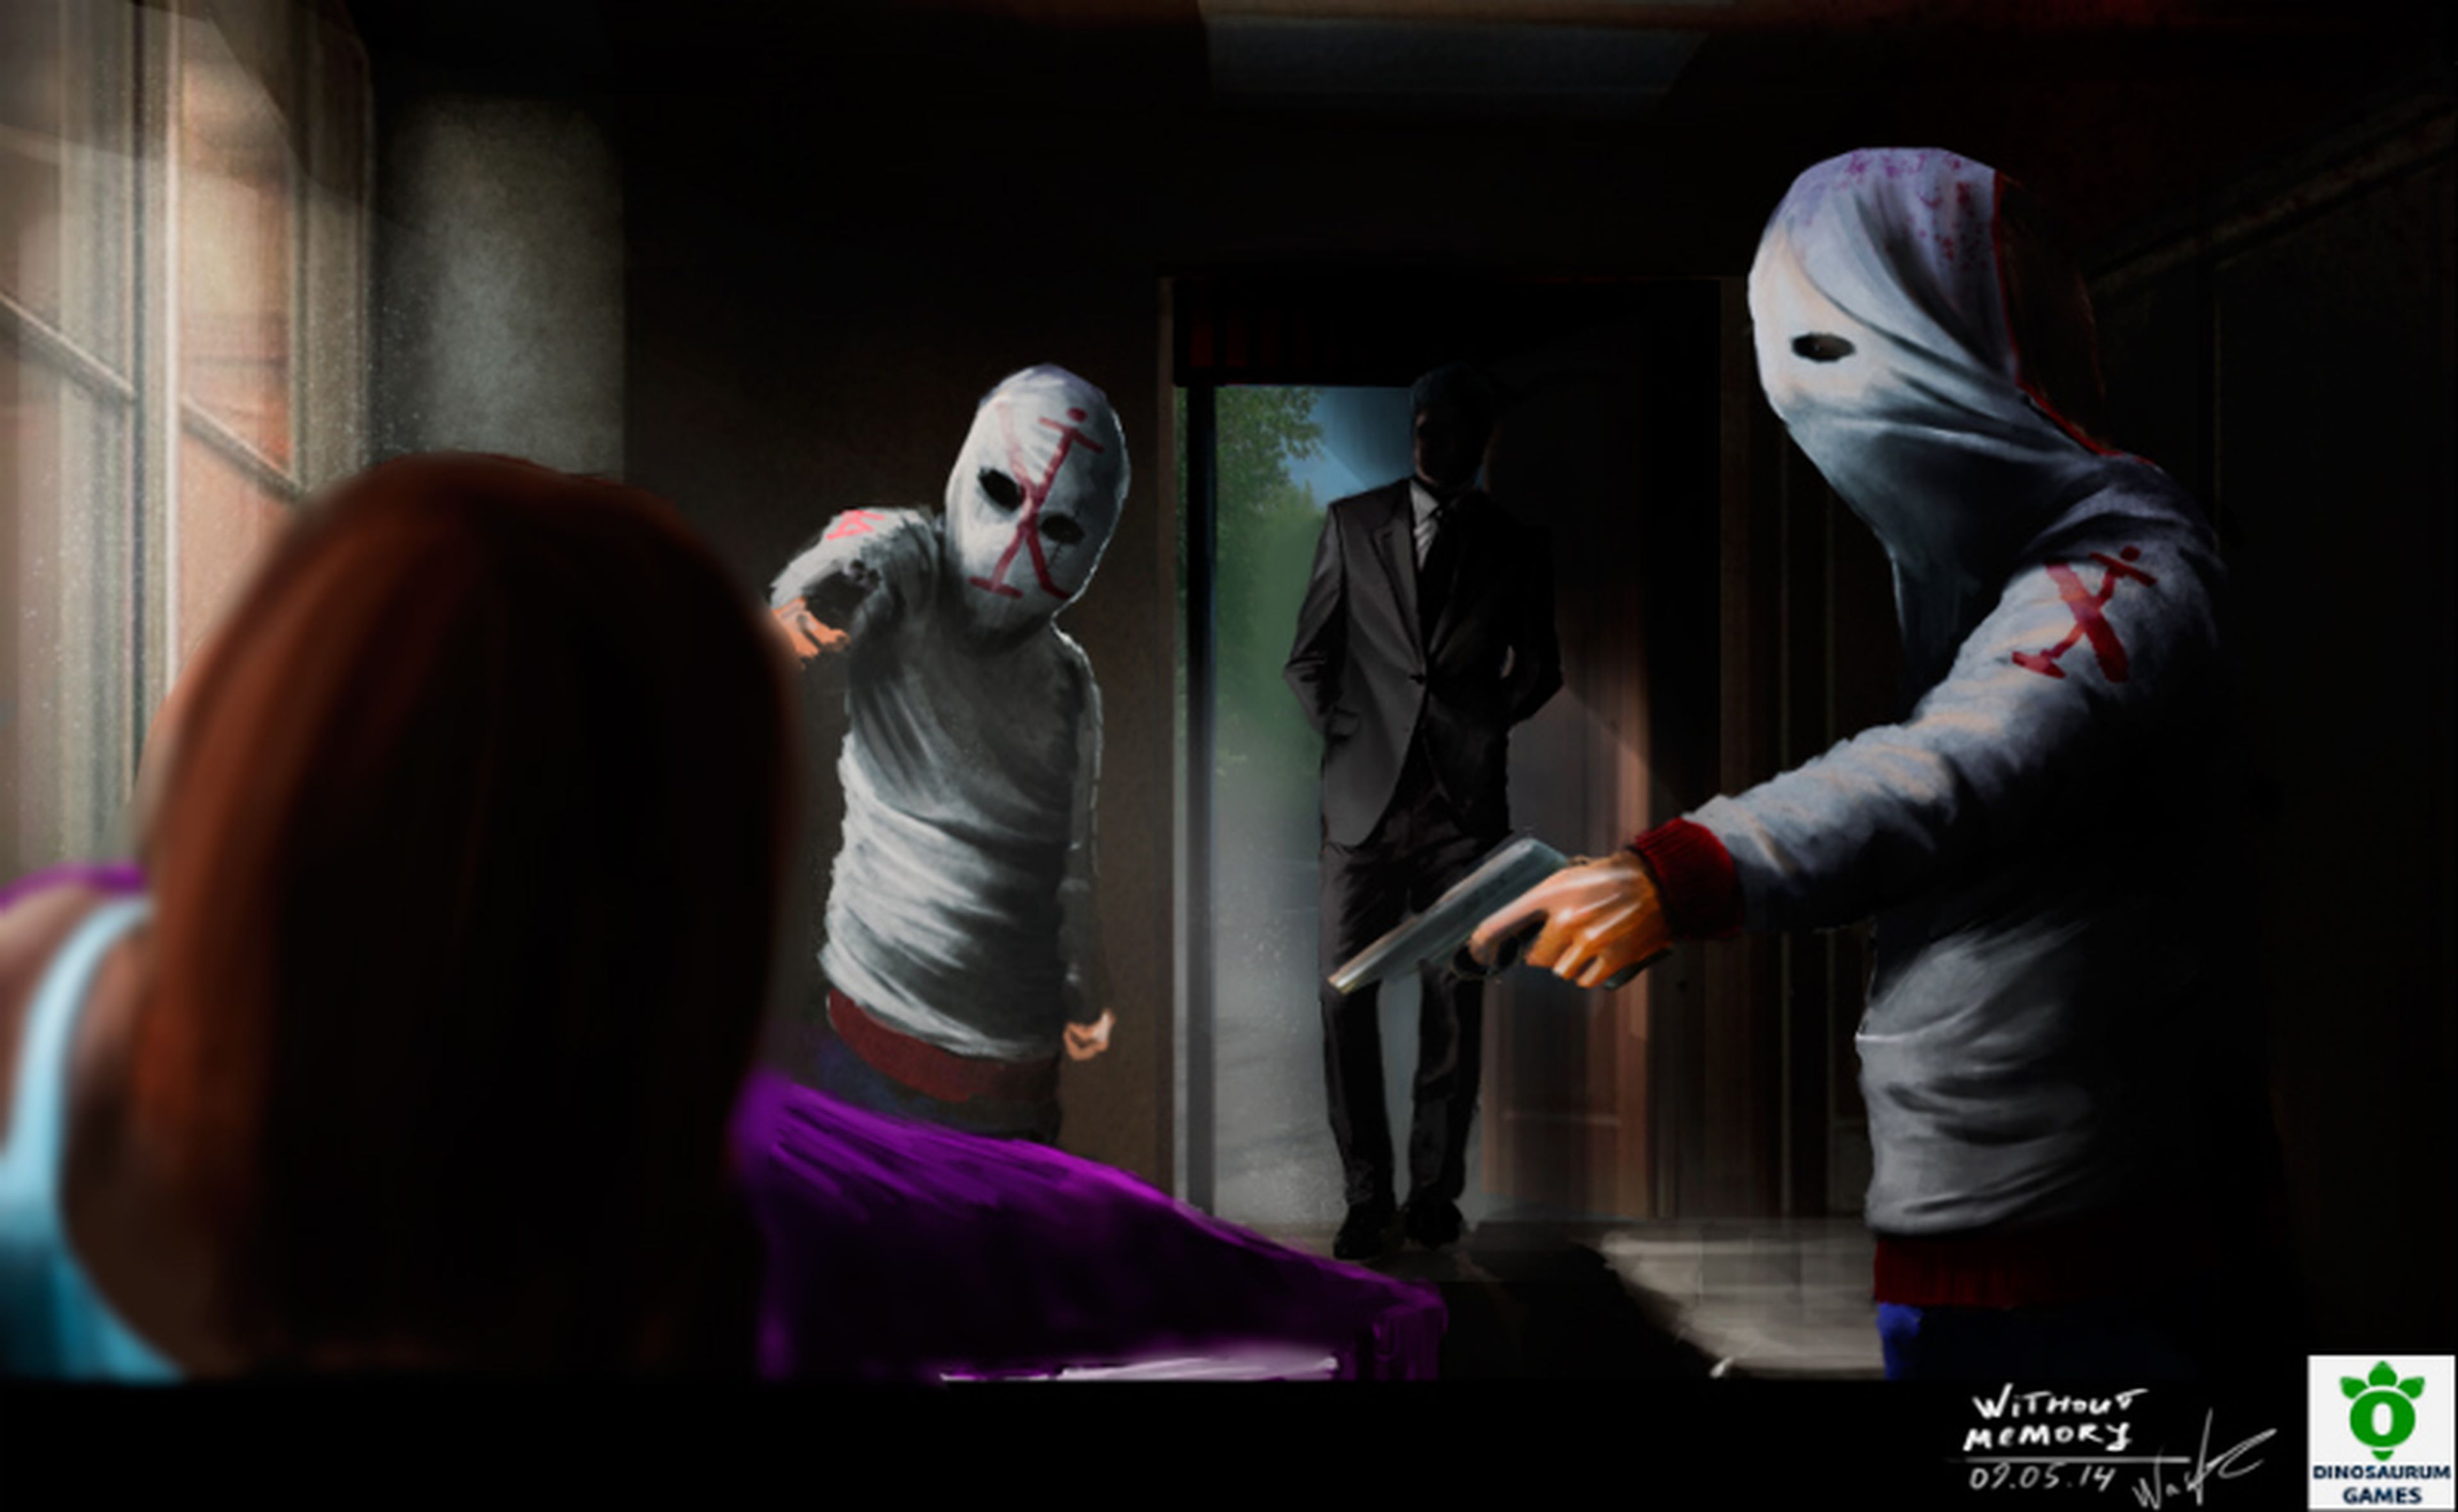 Nuevos datos de Without Memory, thriller interactivo para PS4